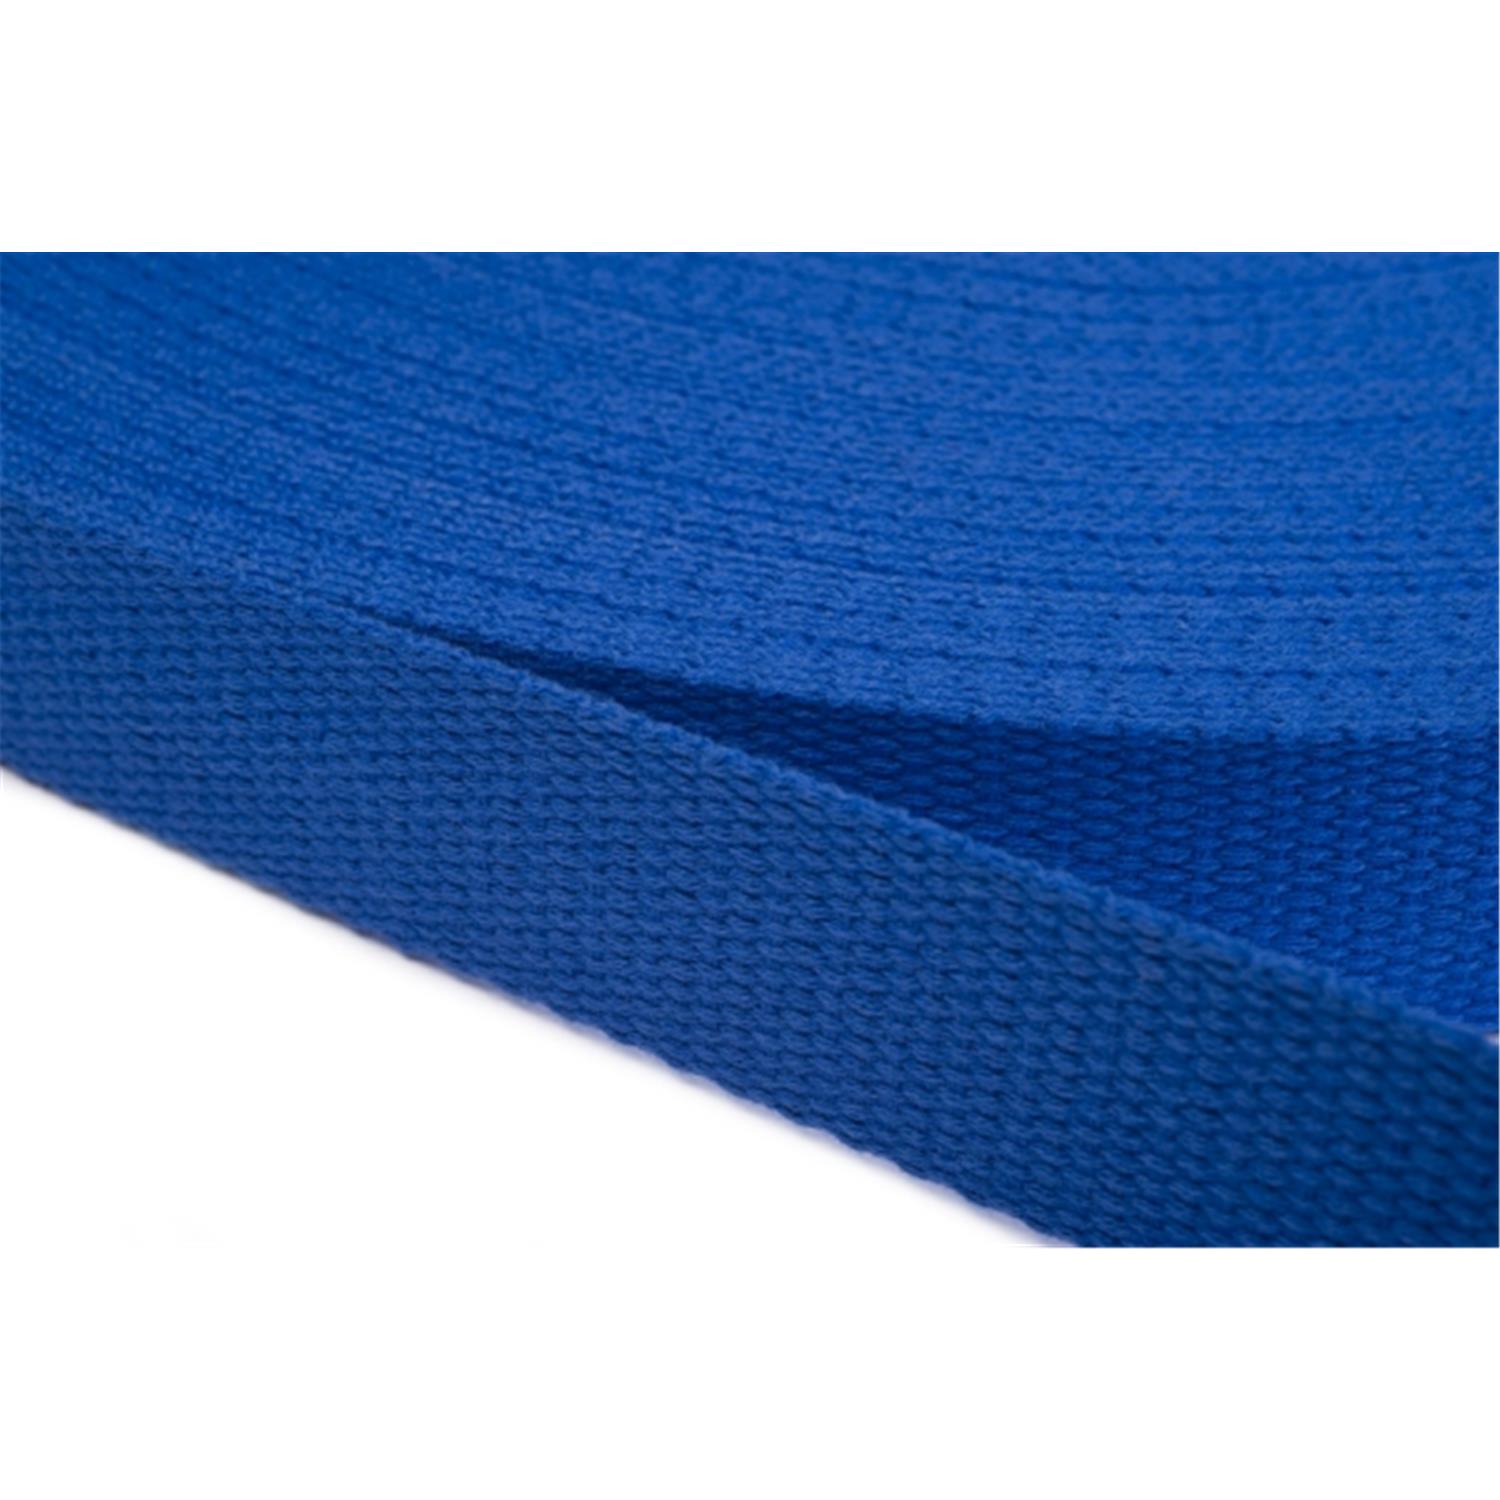 Gurtband aus Baumwolle 20mm in 20 Farben 12 - royalblau 6 Meter